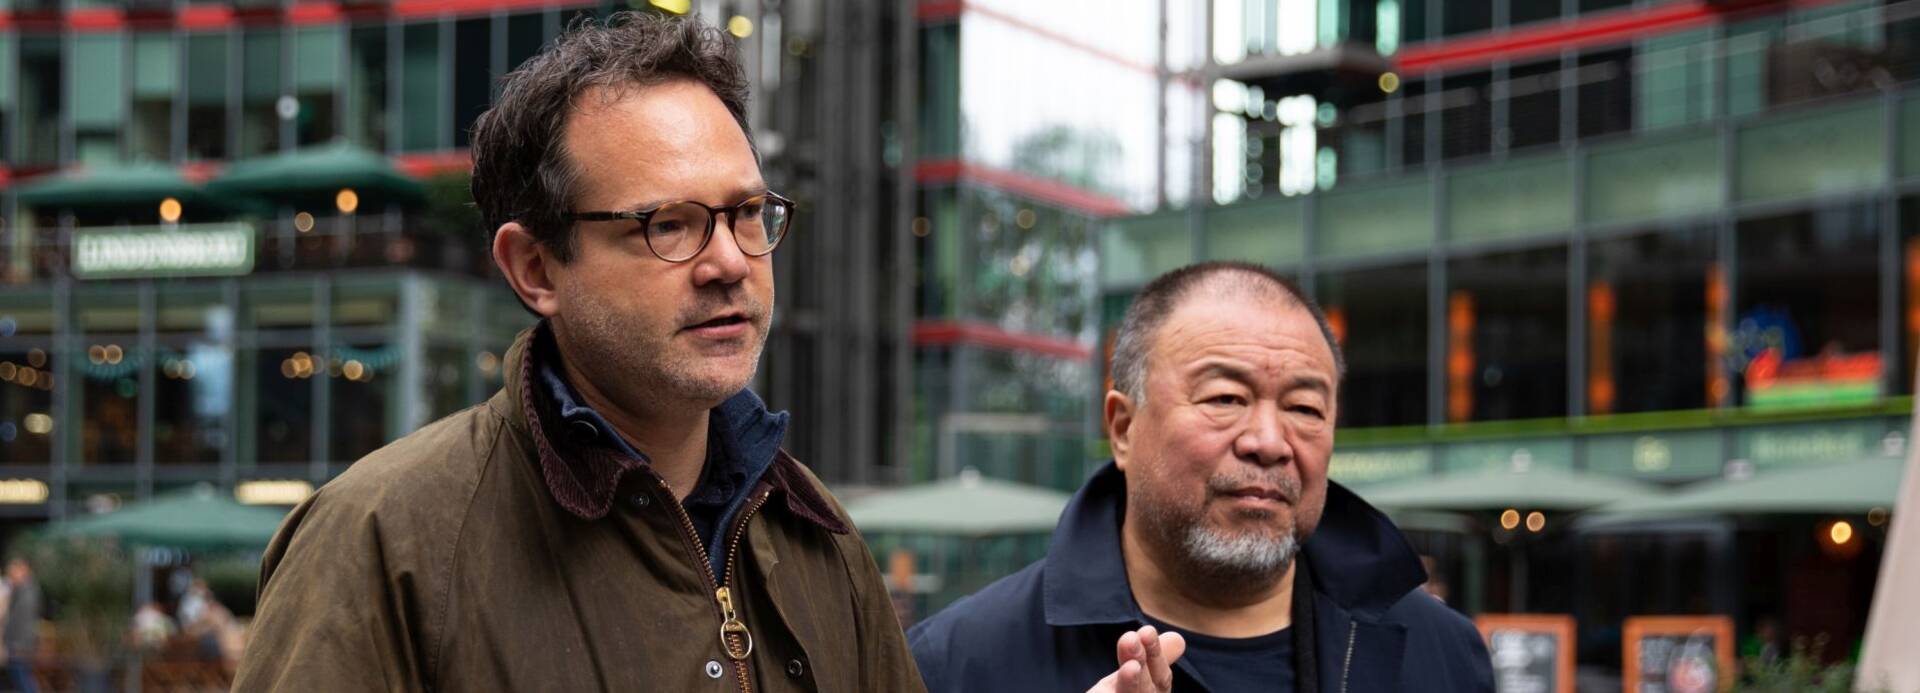 Geschäftsführer von Aktion gegen den Hunger Jan Sebastian Friedrich-Rust mit Ai Weiwei